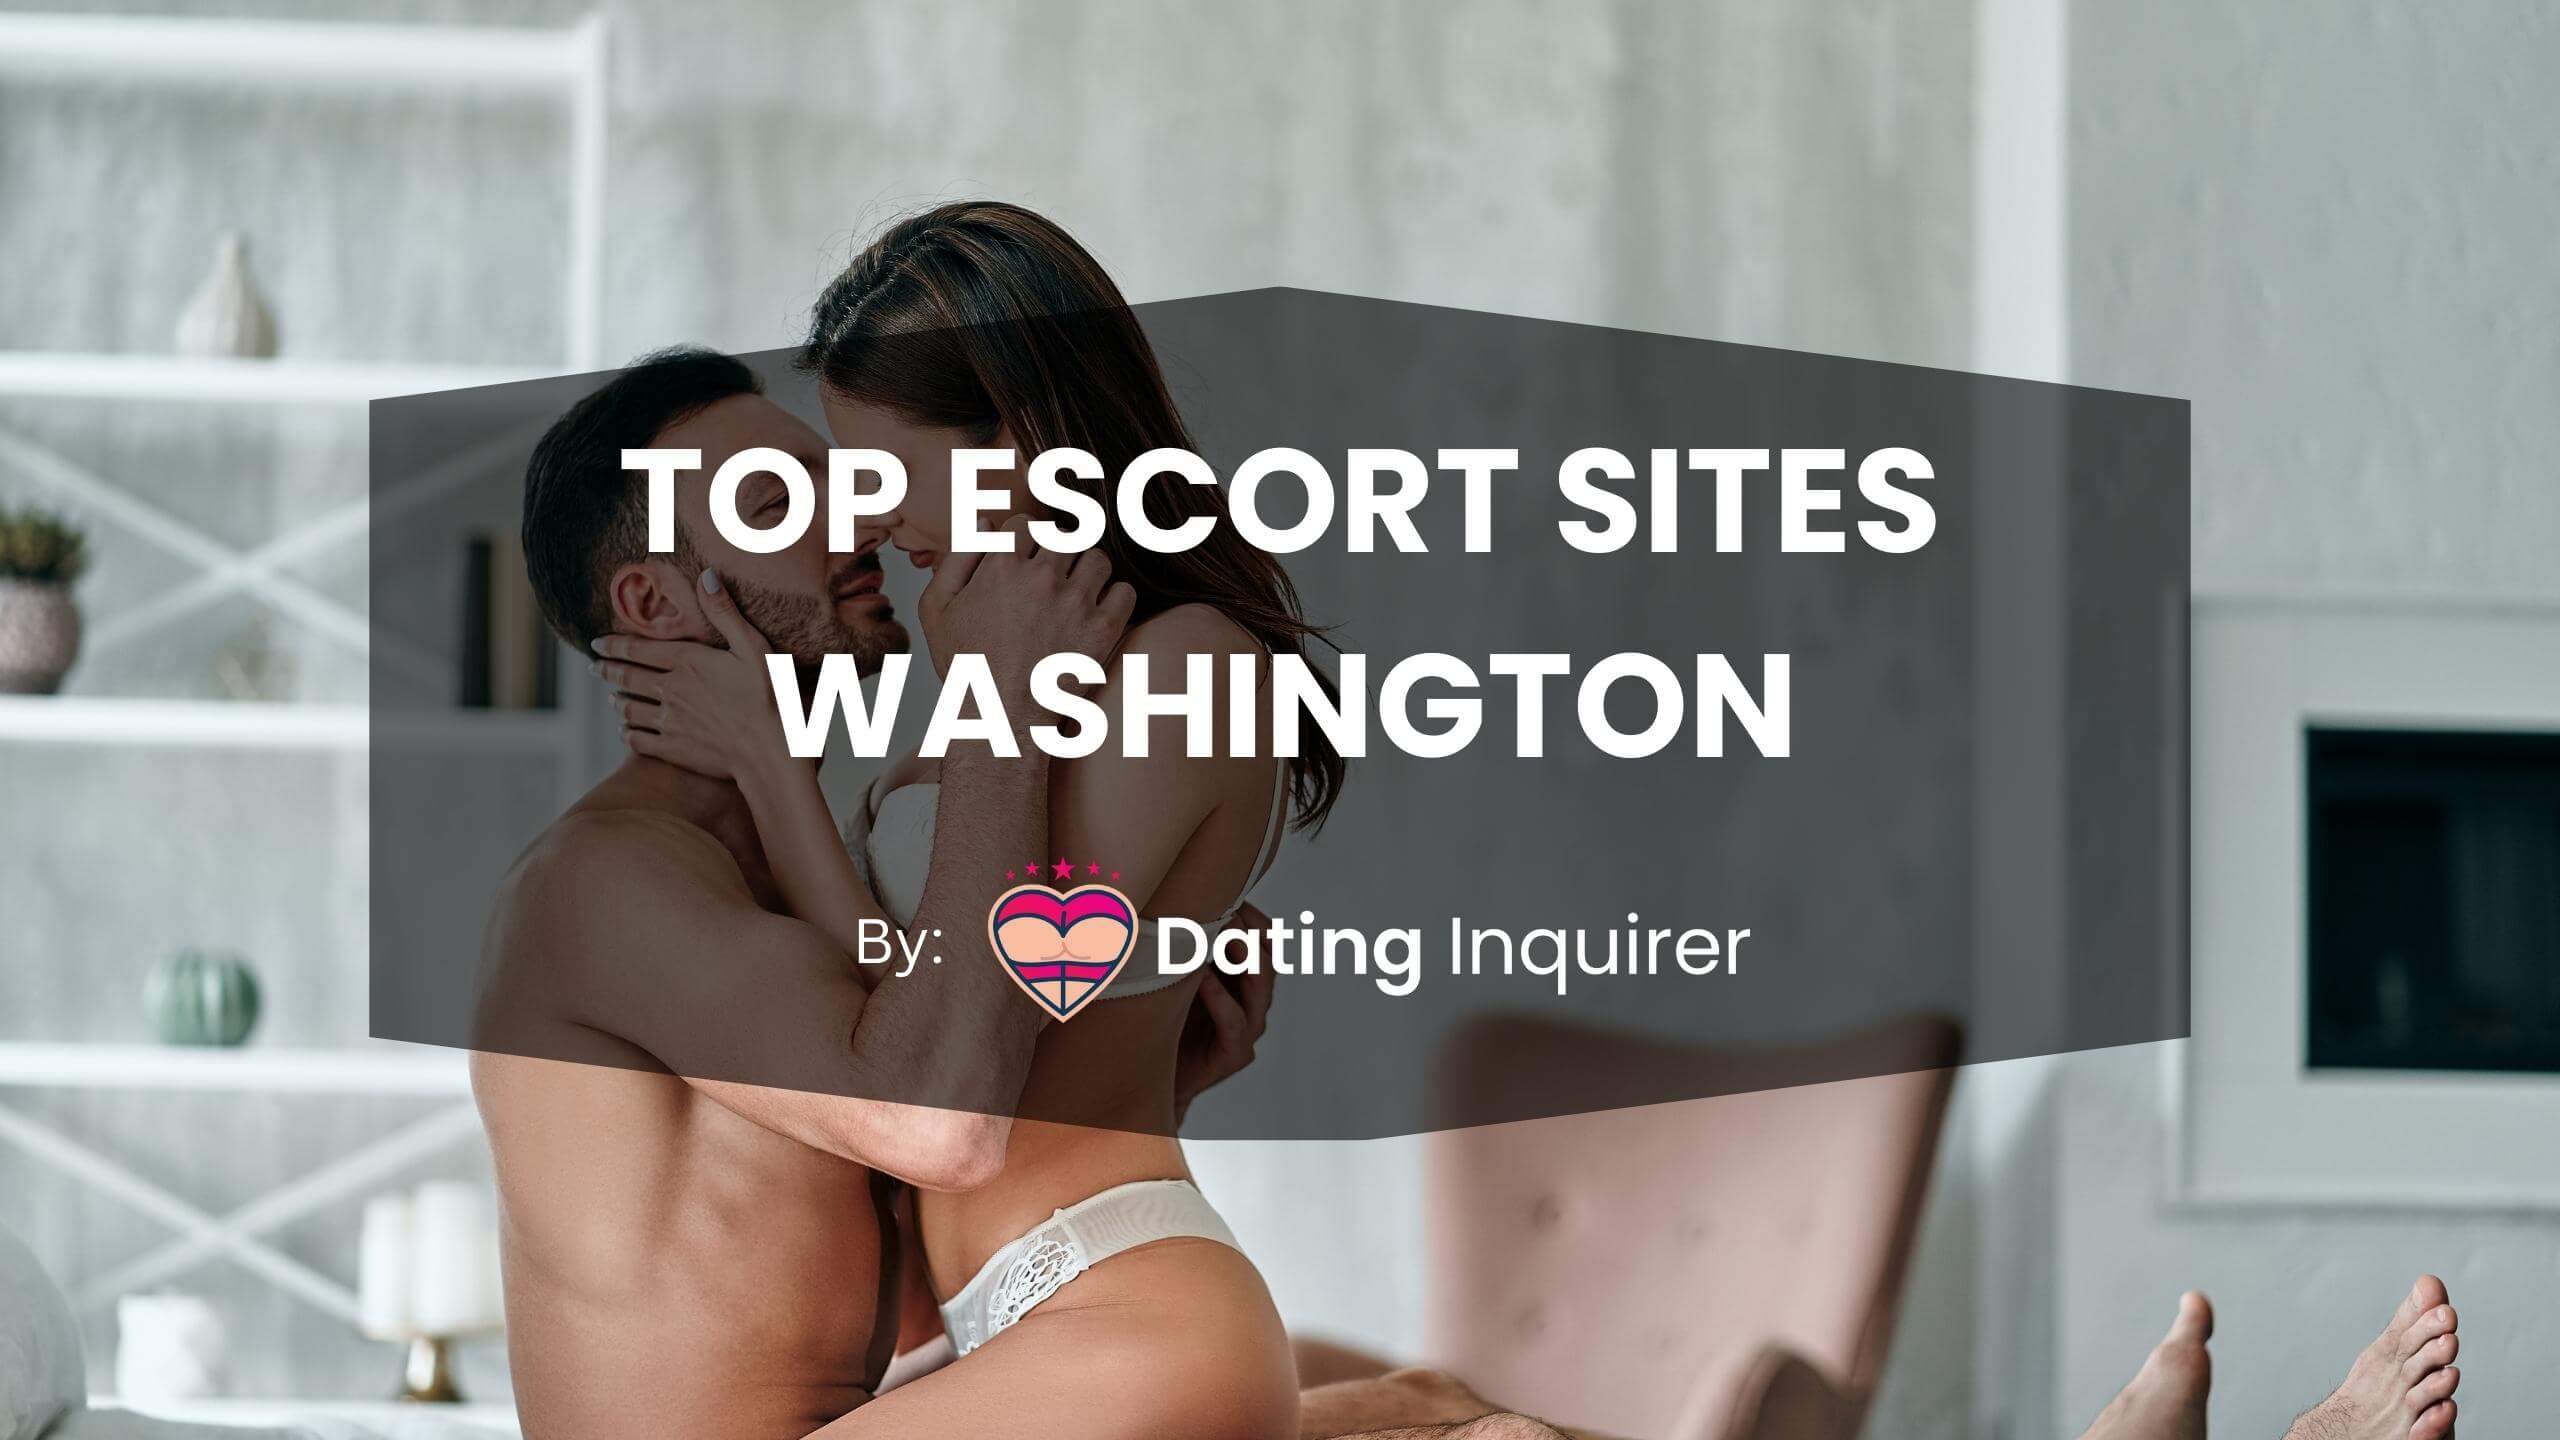 top escort sites washington cover